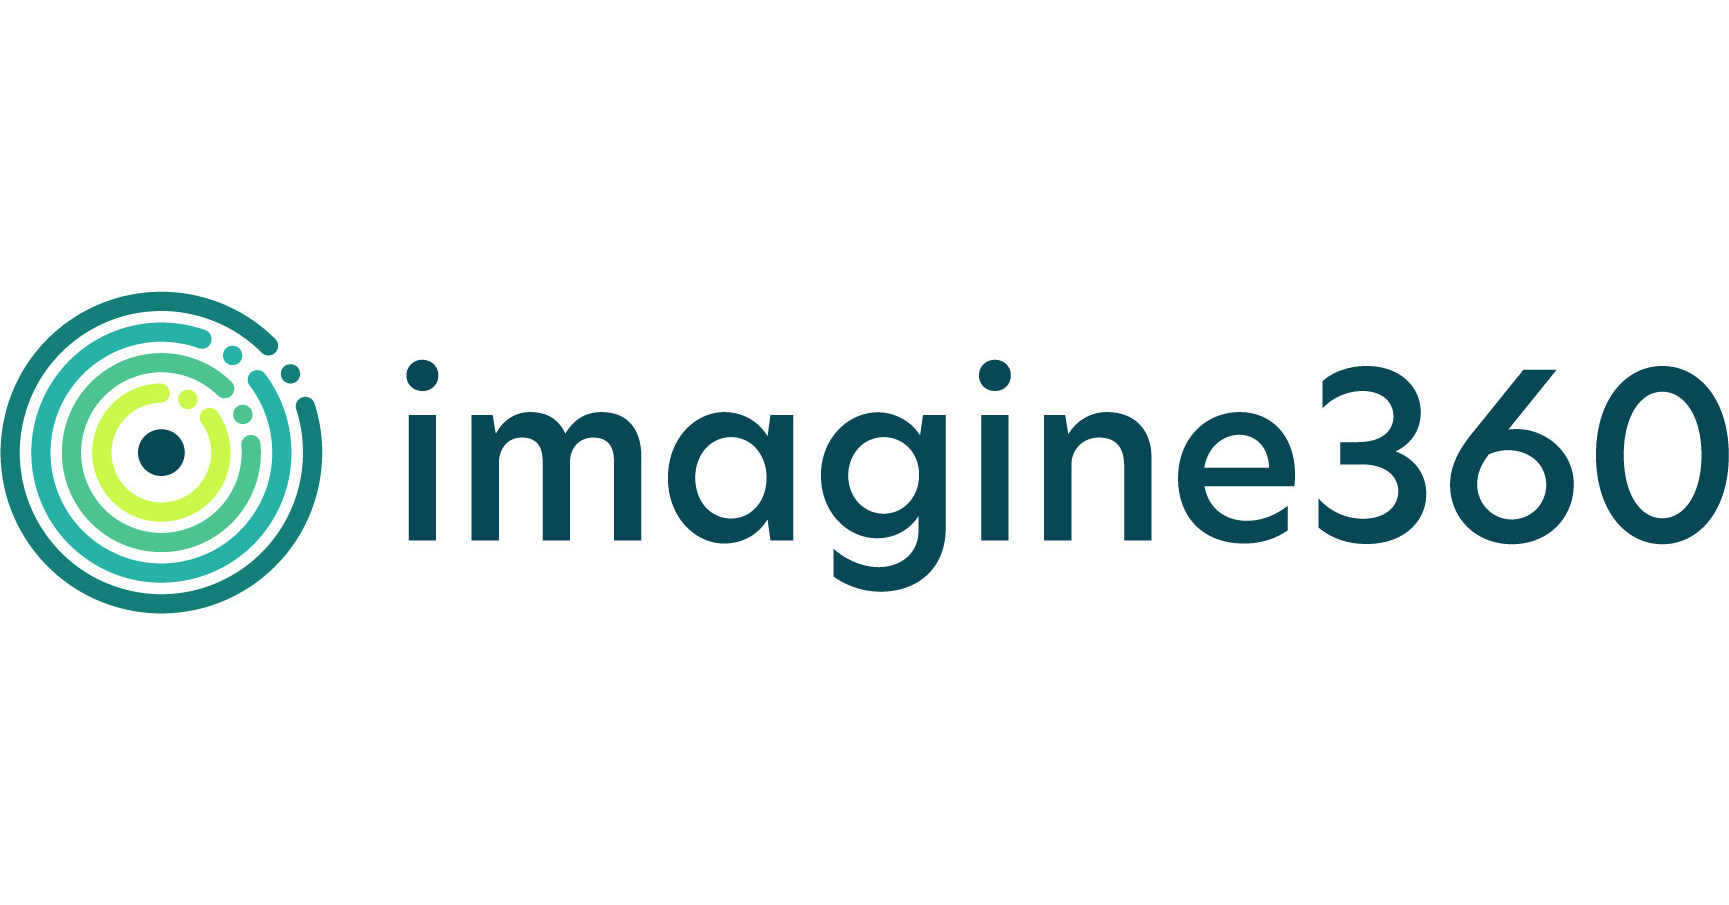 Imagine360 Expands Support for Enterprise Clients with Quantum Health Partnership